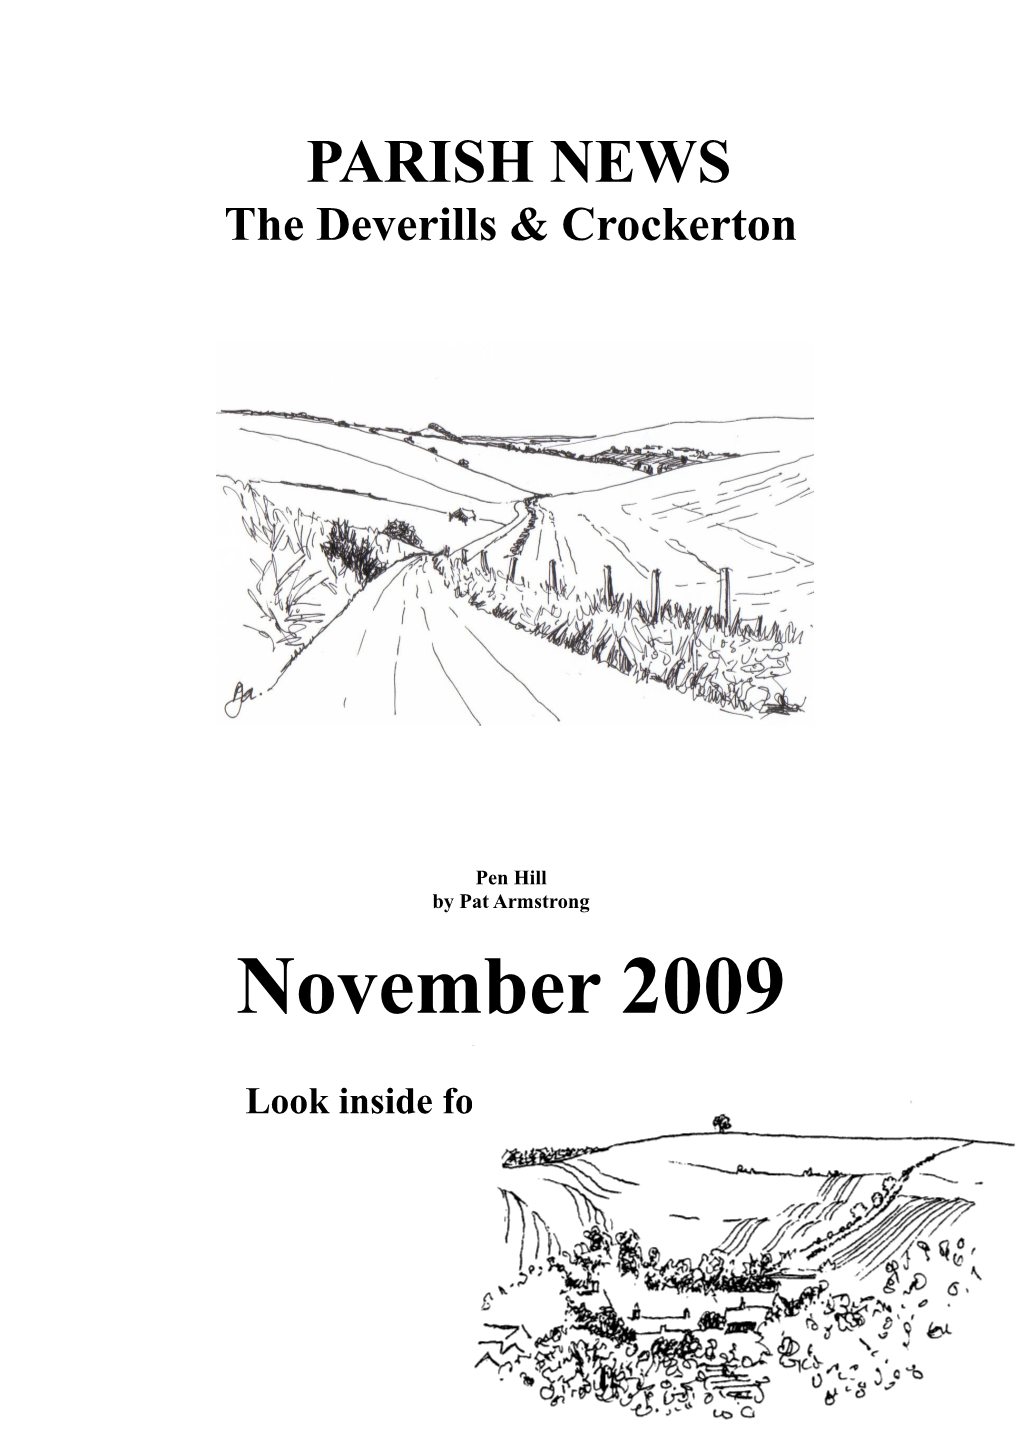 The Deverills & Crockerton